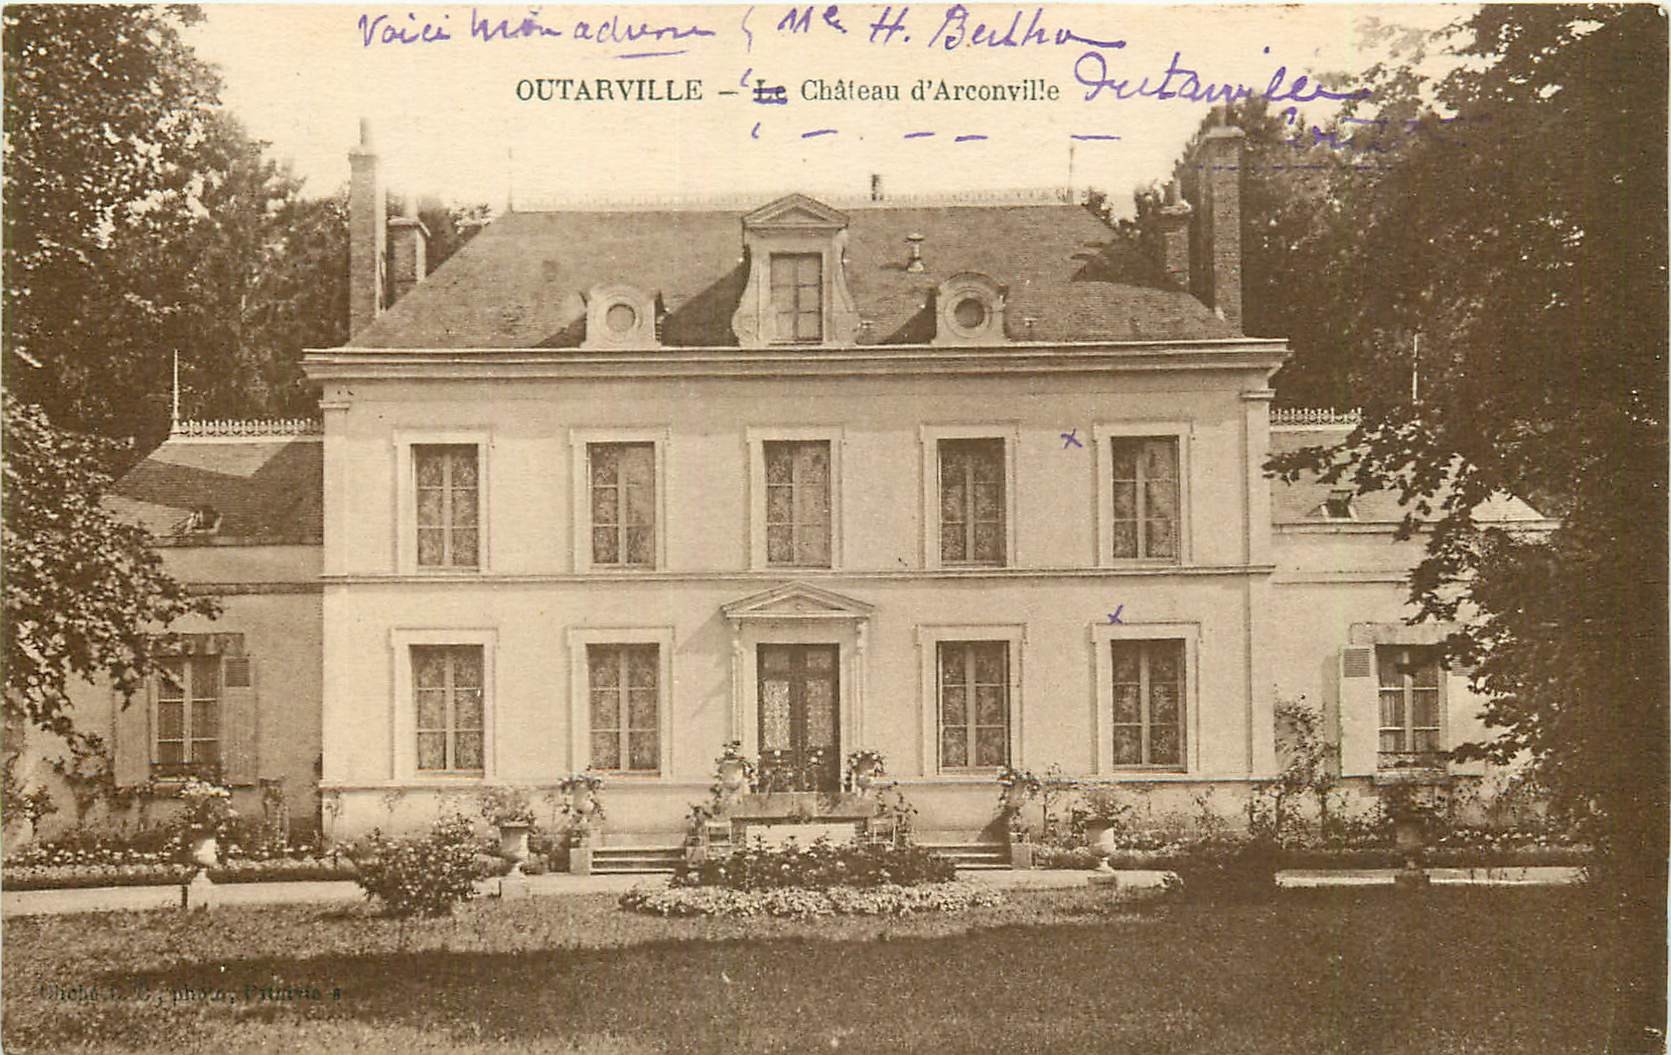 45 OUTARVILLE. Château d'Arconville